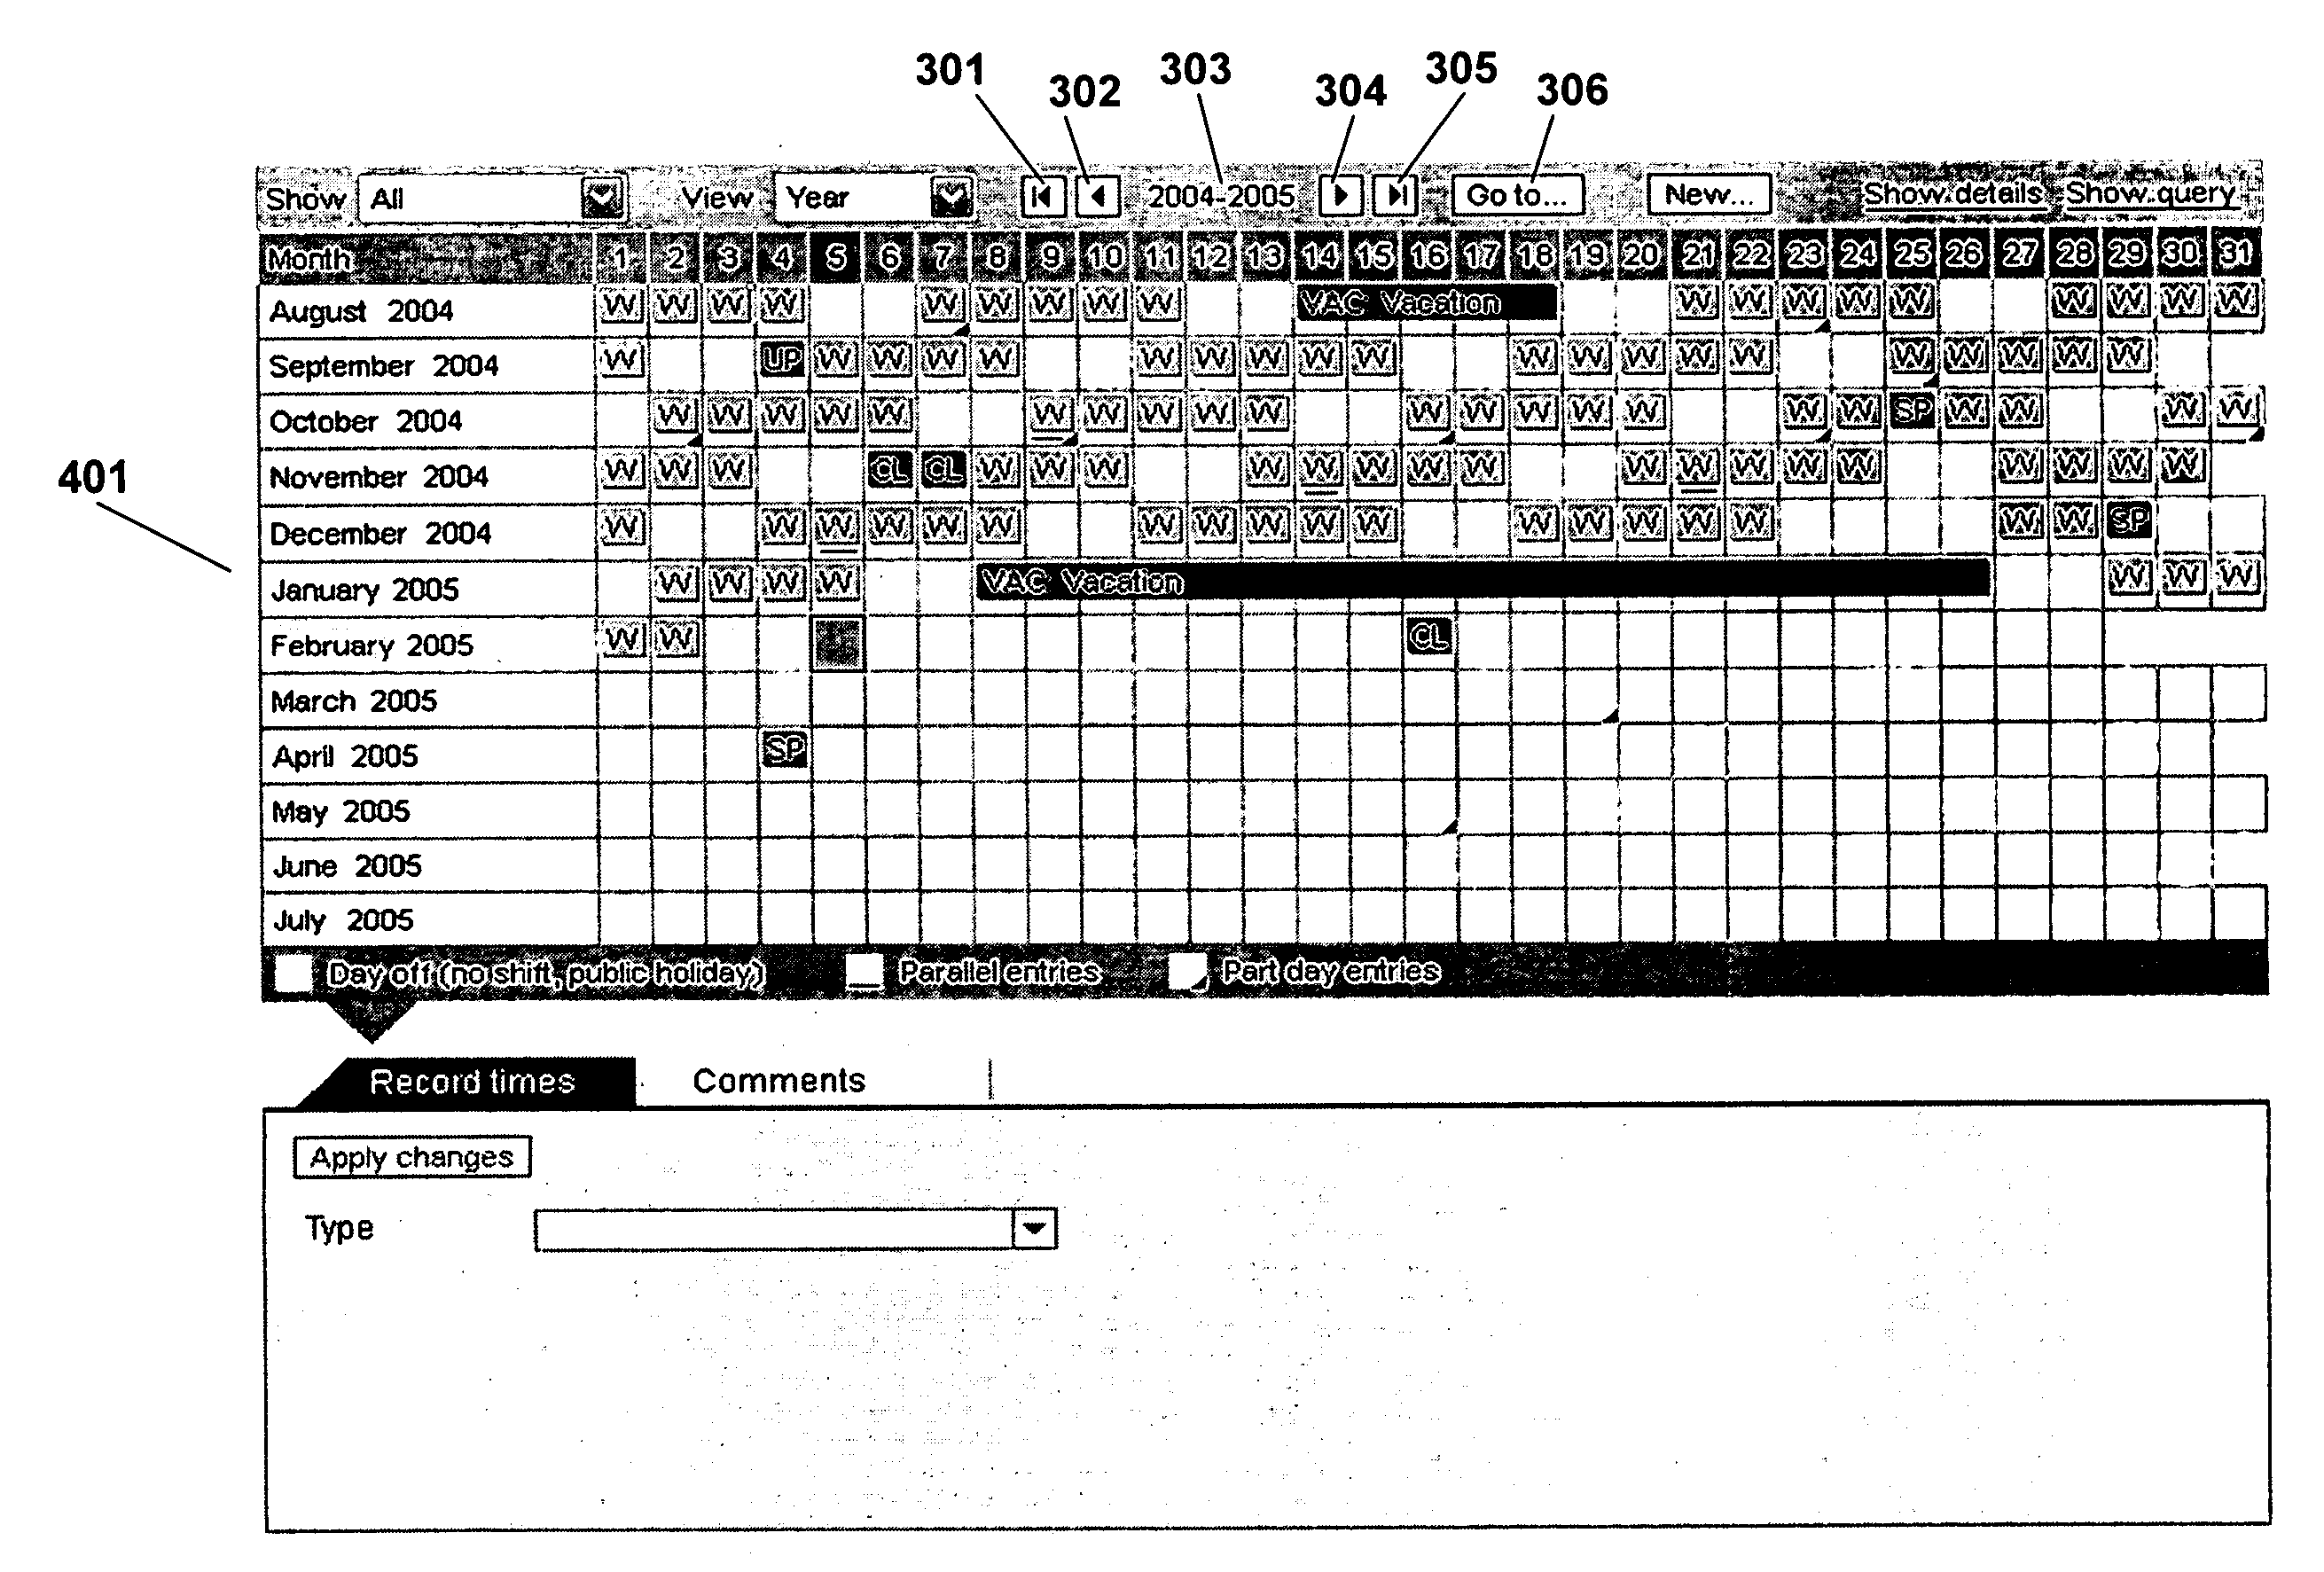 Efficient control of calendar information in computer graphics